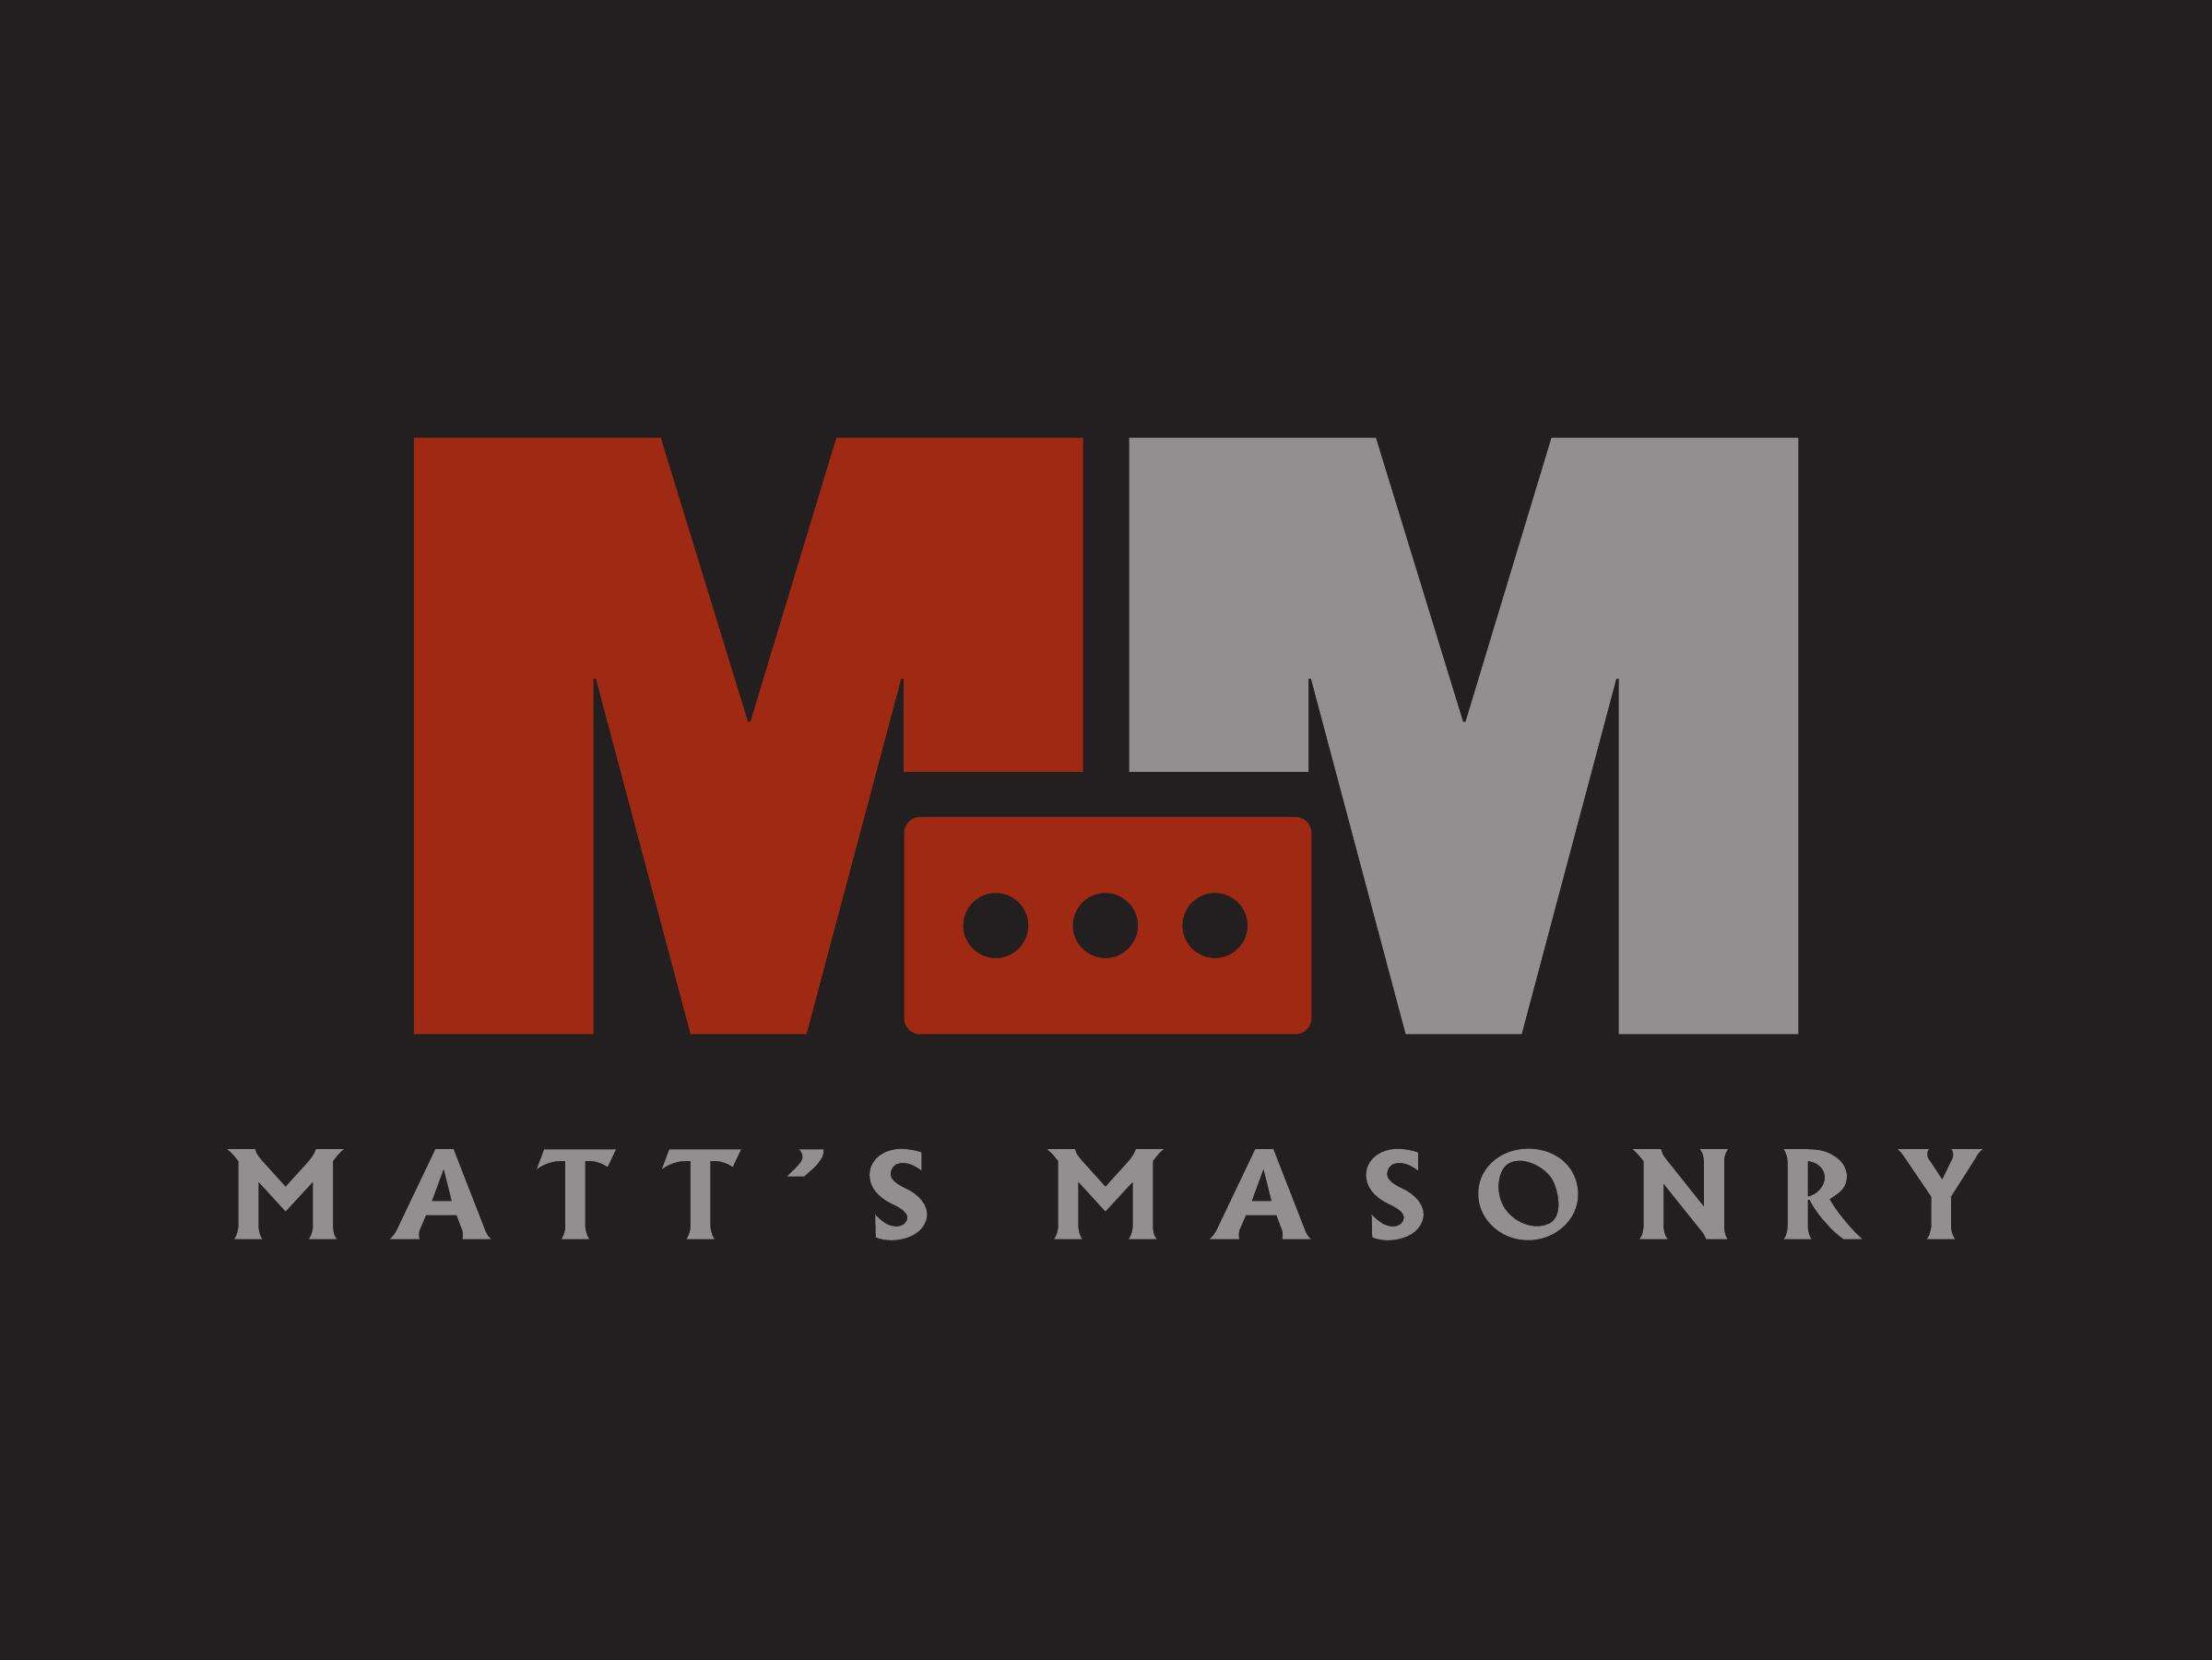 Matt's Masonry